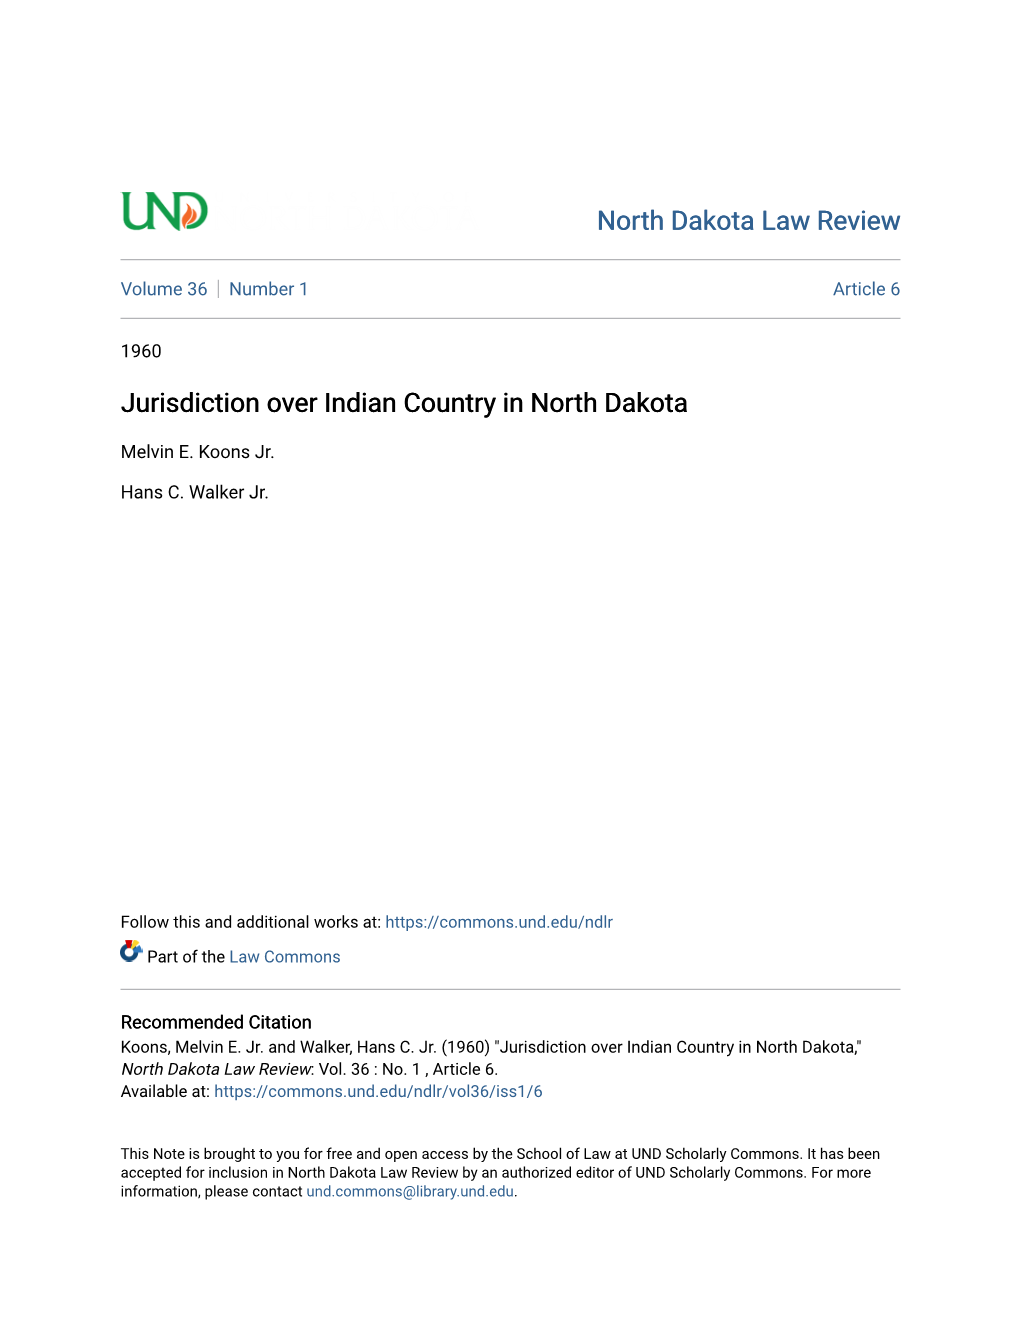 Jurisdiction Over Indian Country in North Dakota